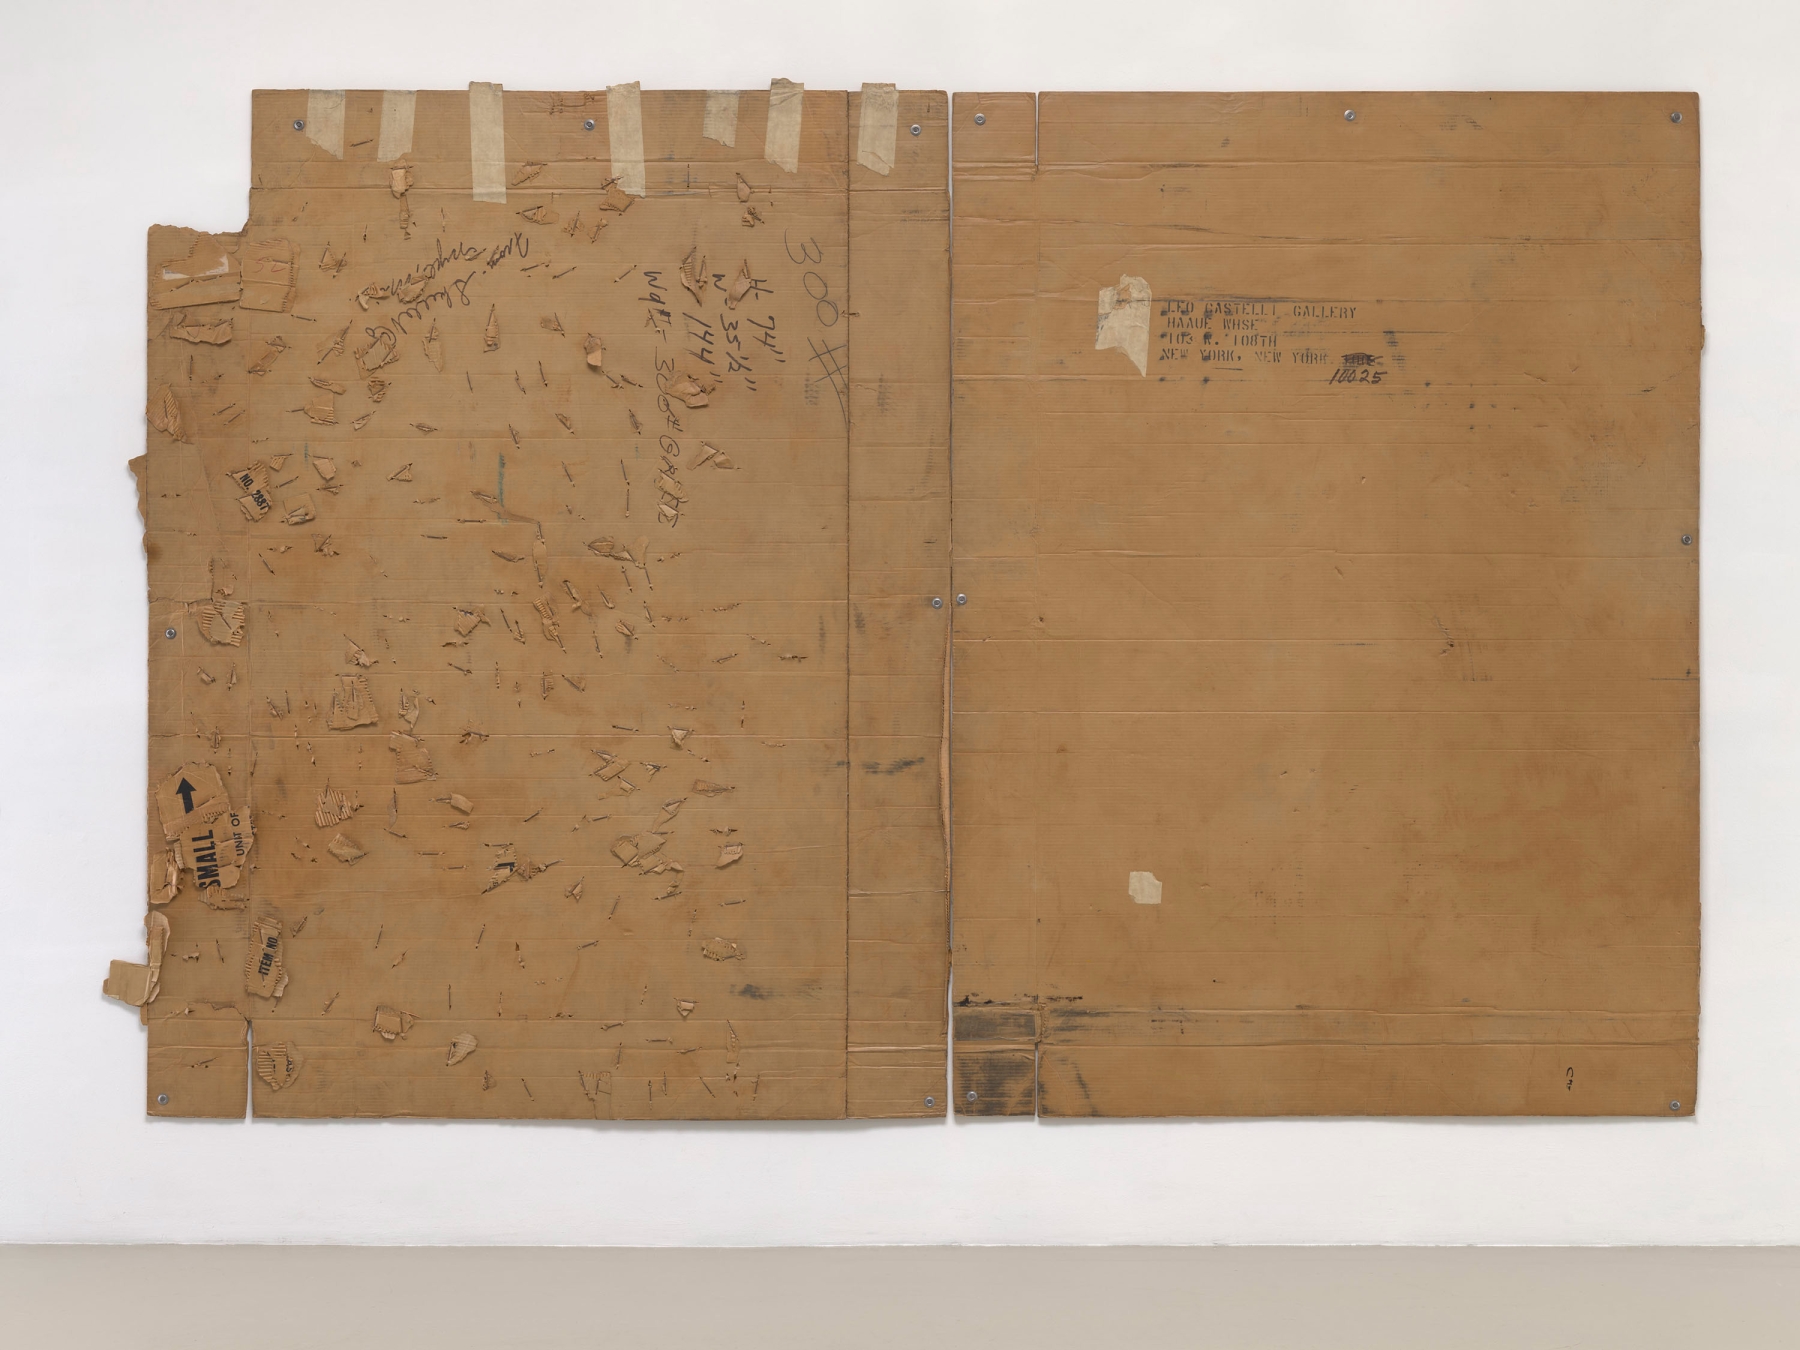 Robert Rauschenberg, Castelli / Small Turtle Bowl (Cardboard), 1971, cardboard and staples on cardboard, 94 &amp;frac12;&amp;nbsp; x 145 ⅝ x 2 ⅛ inches (240 x 370 x 5.5 cm)&amp;nbsp;